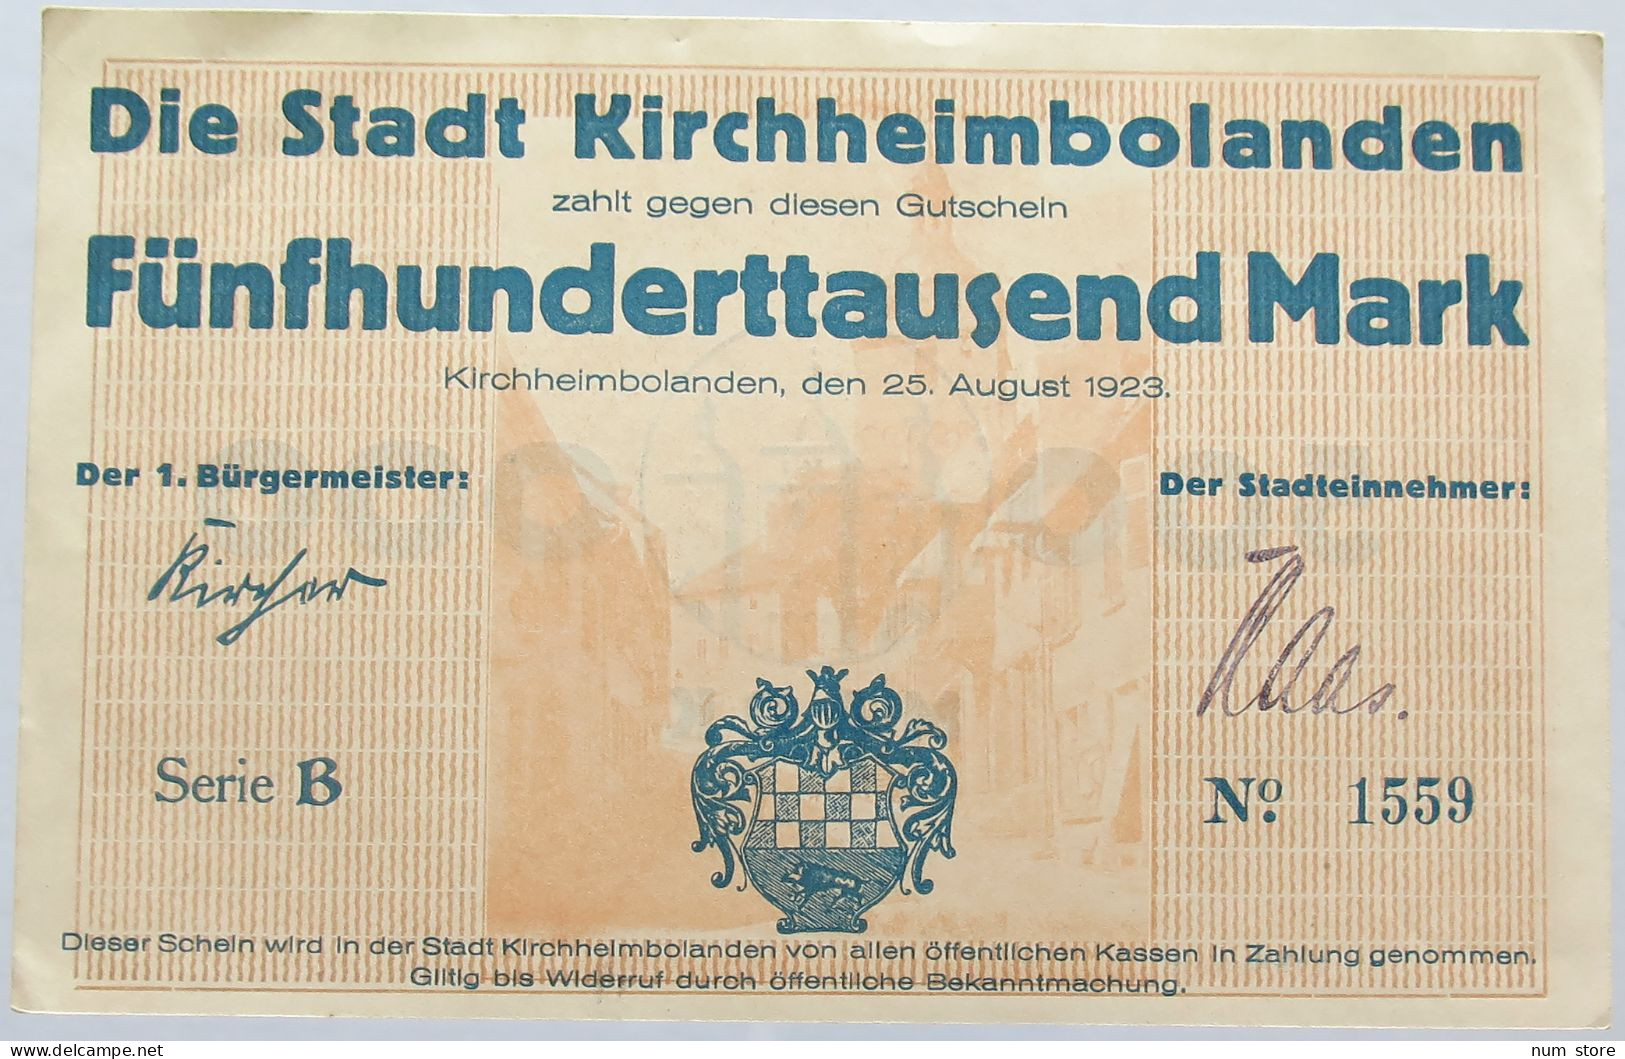 GERMANY 500000 MARK KIRCHHEIMBOLANDEN #alb004 0057 - 500.000 Mark